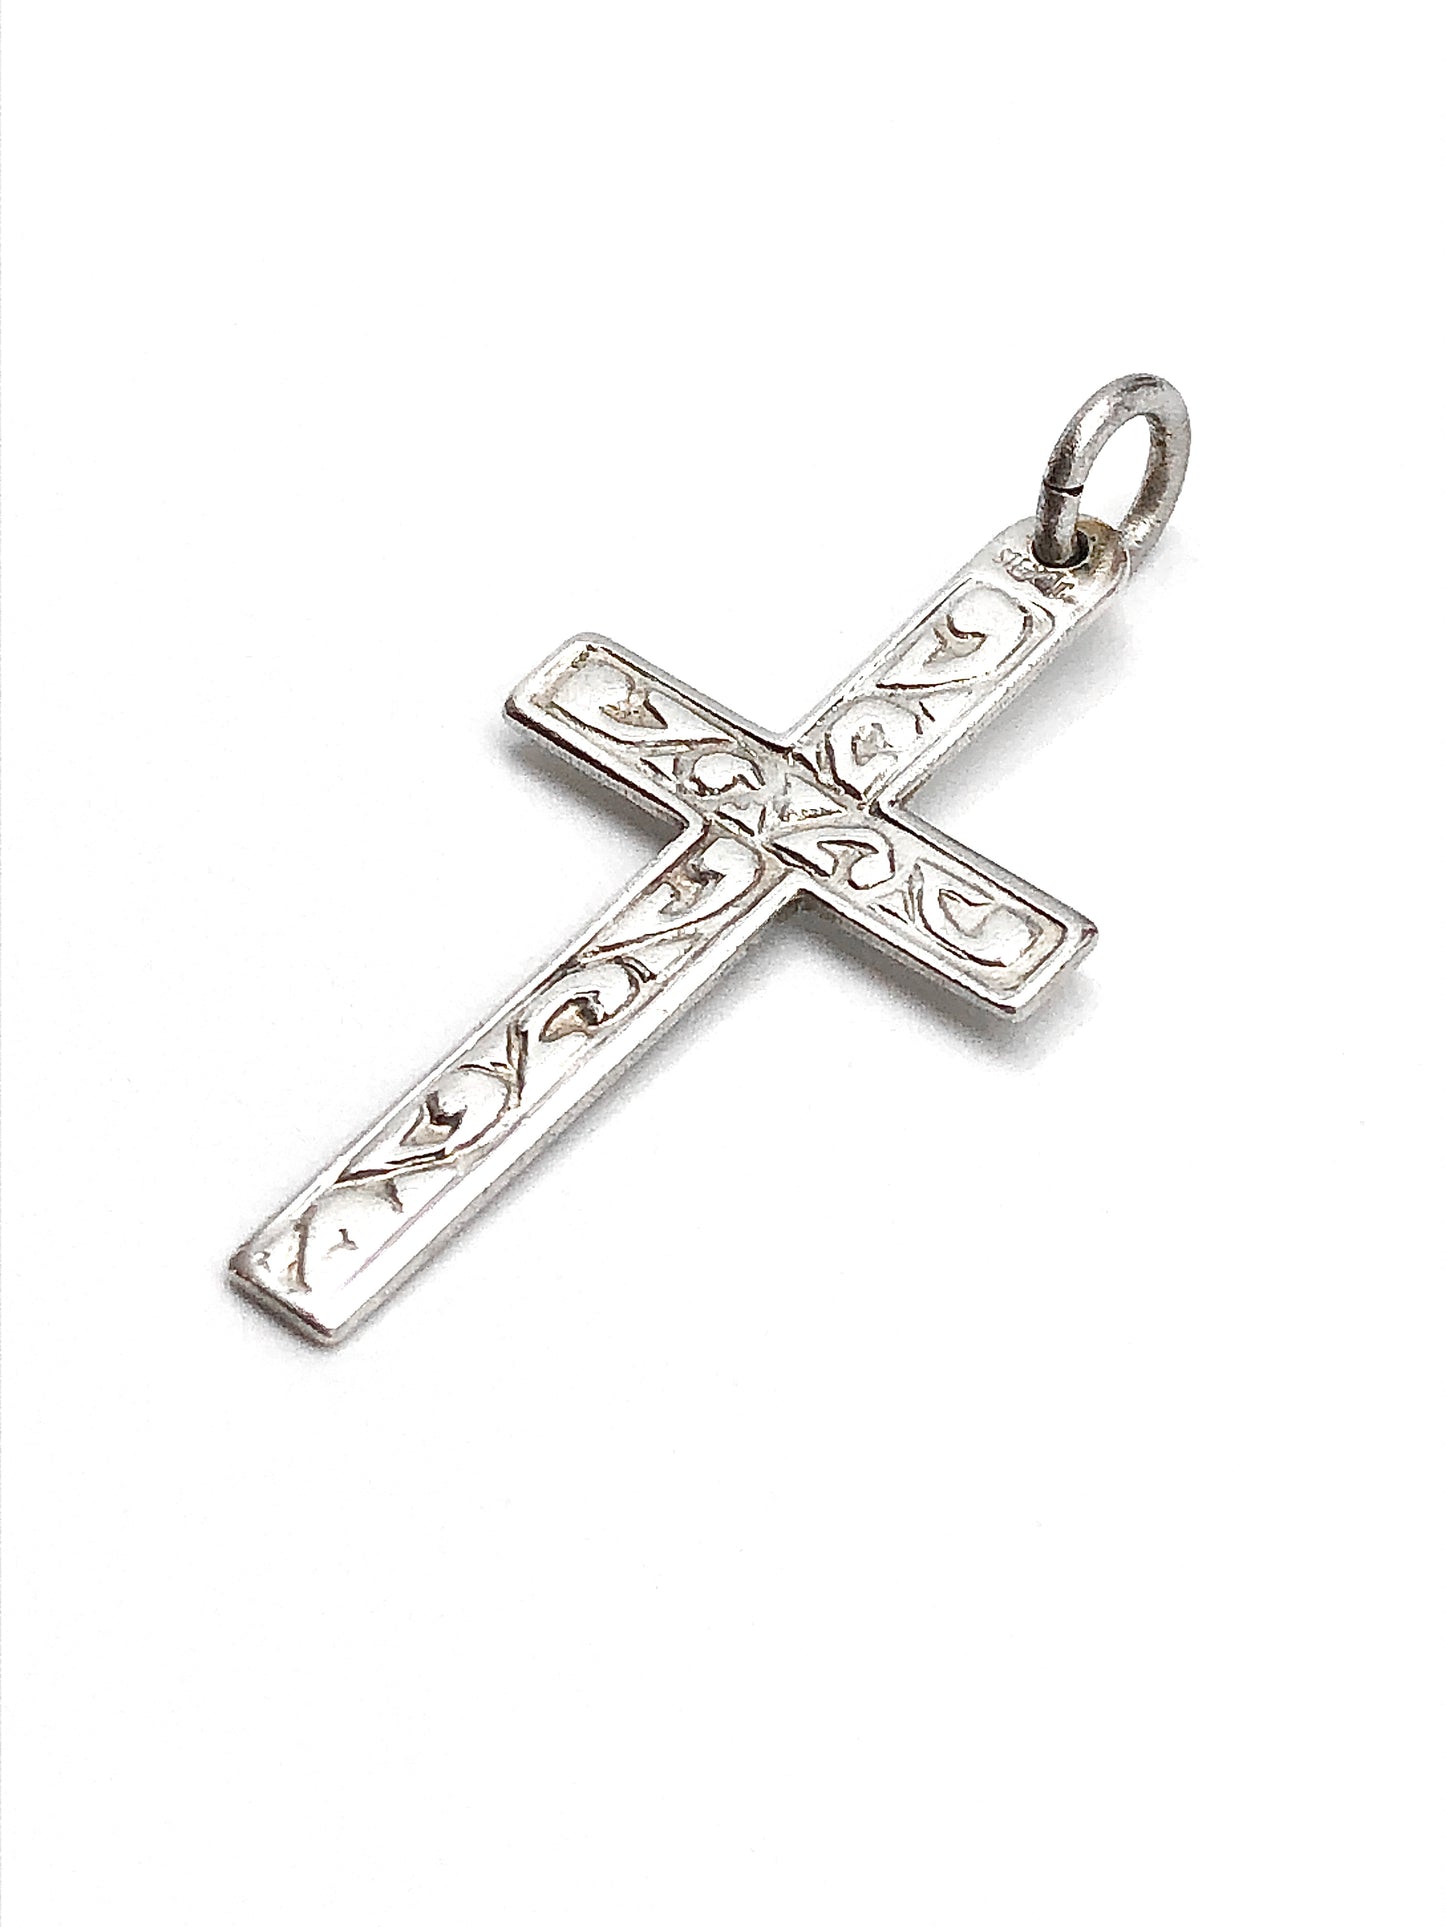 Pendant -Vintage 1950s Sterling Silver Traditional Cross Design